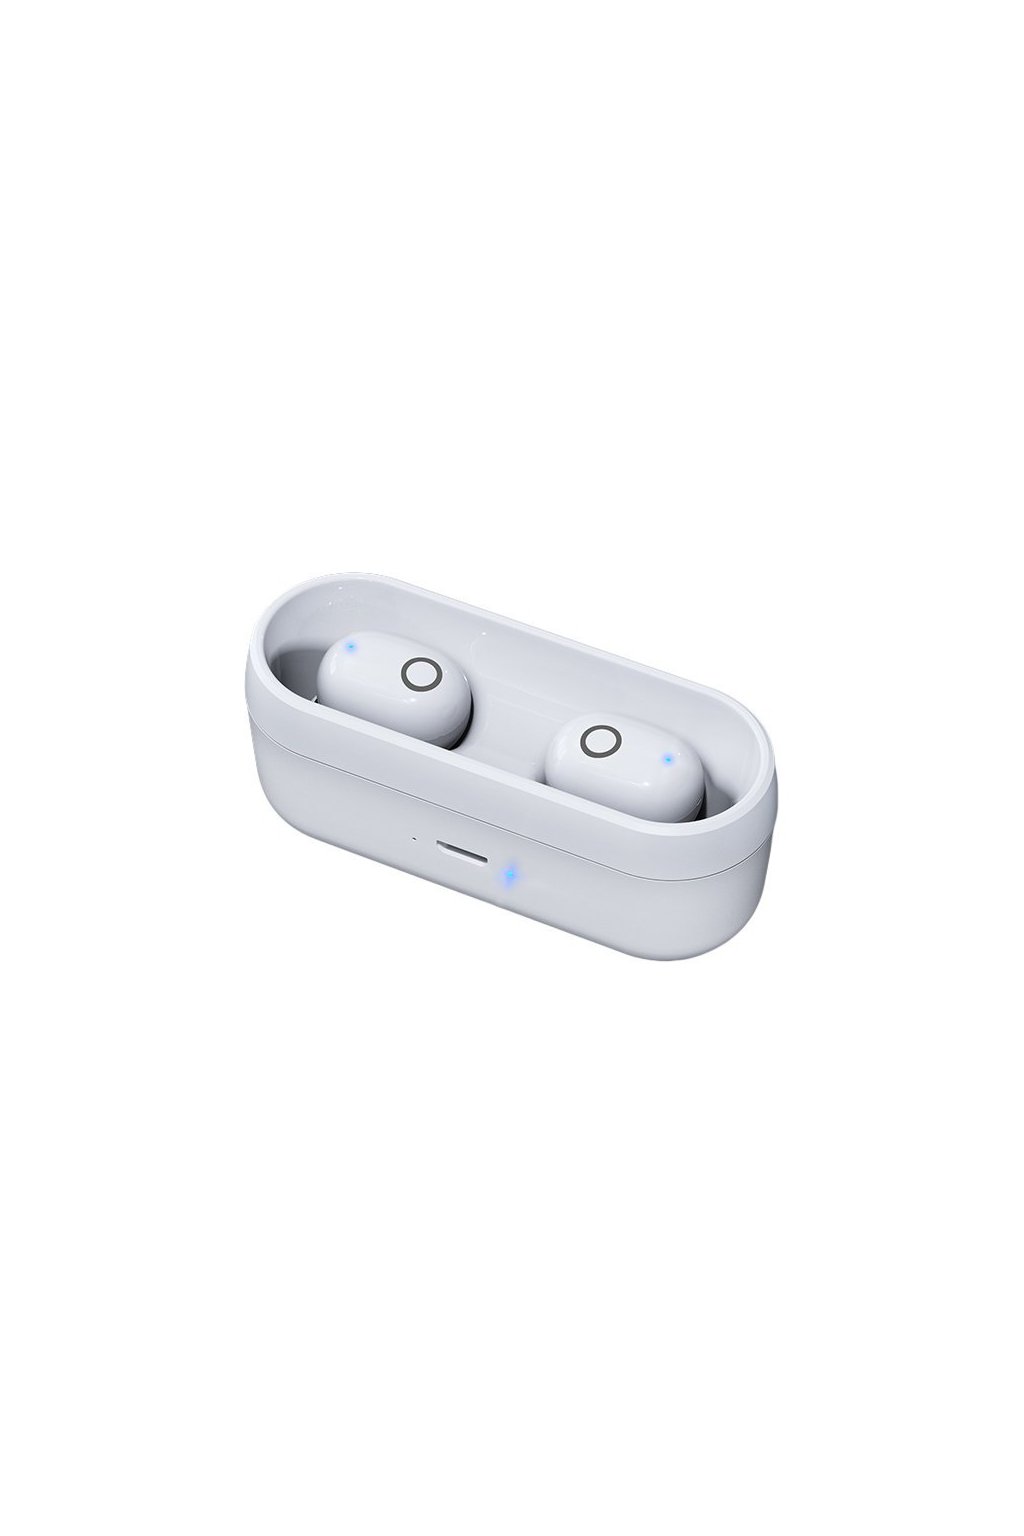 Bezdrôtové slúchadlá Proda pro Android a iPhone - biele - Bewear.sk |☆